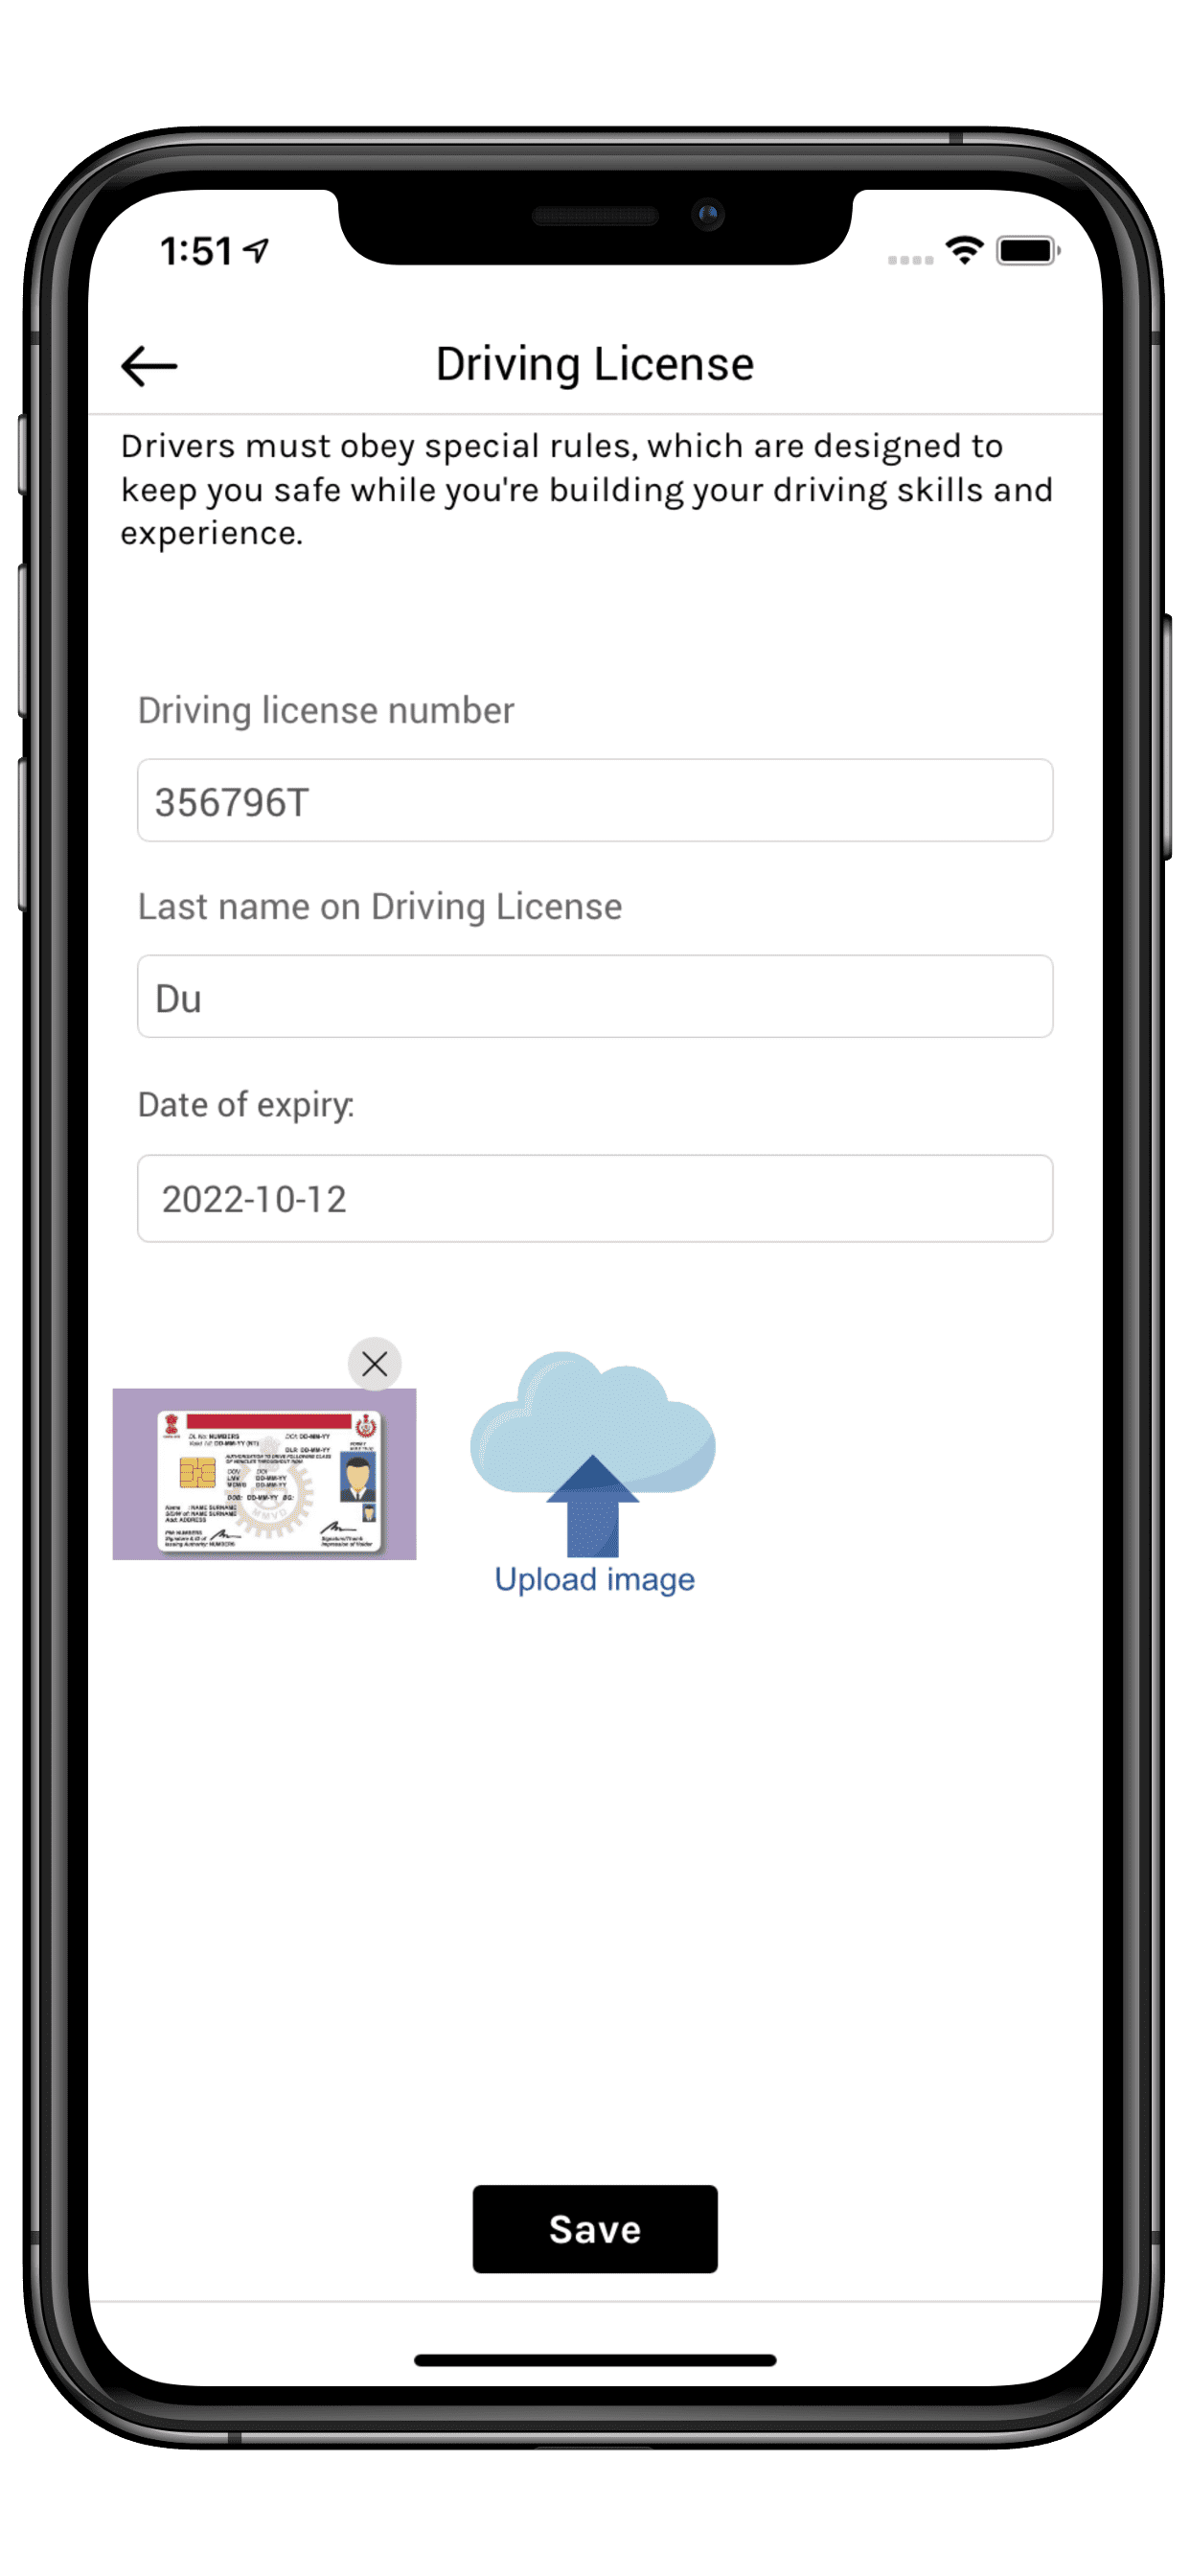 uber clone app